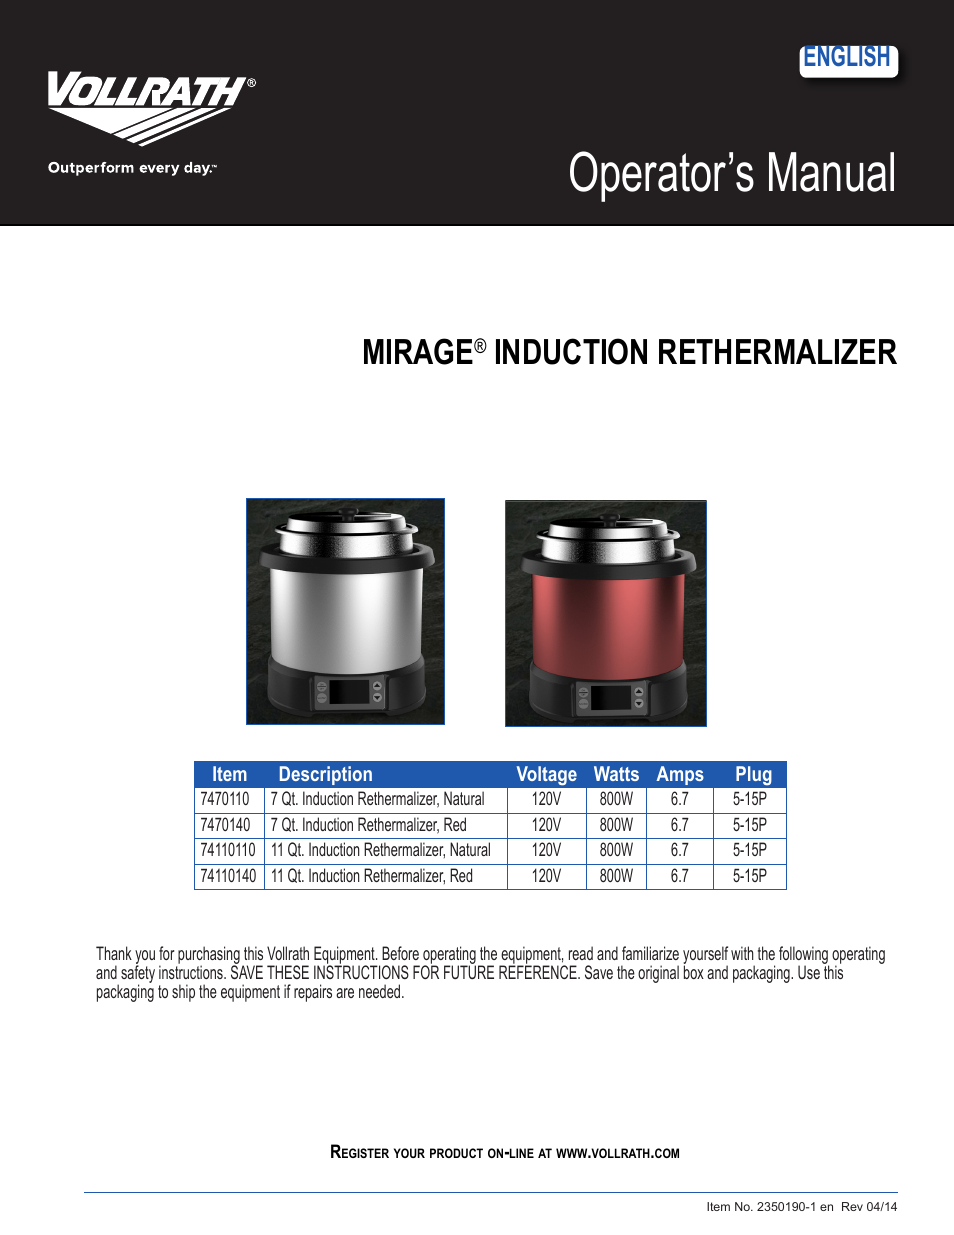 Mirage Induction Rethermalizers 11 Qt